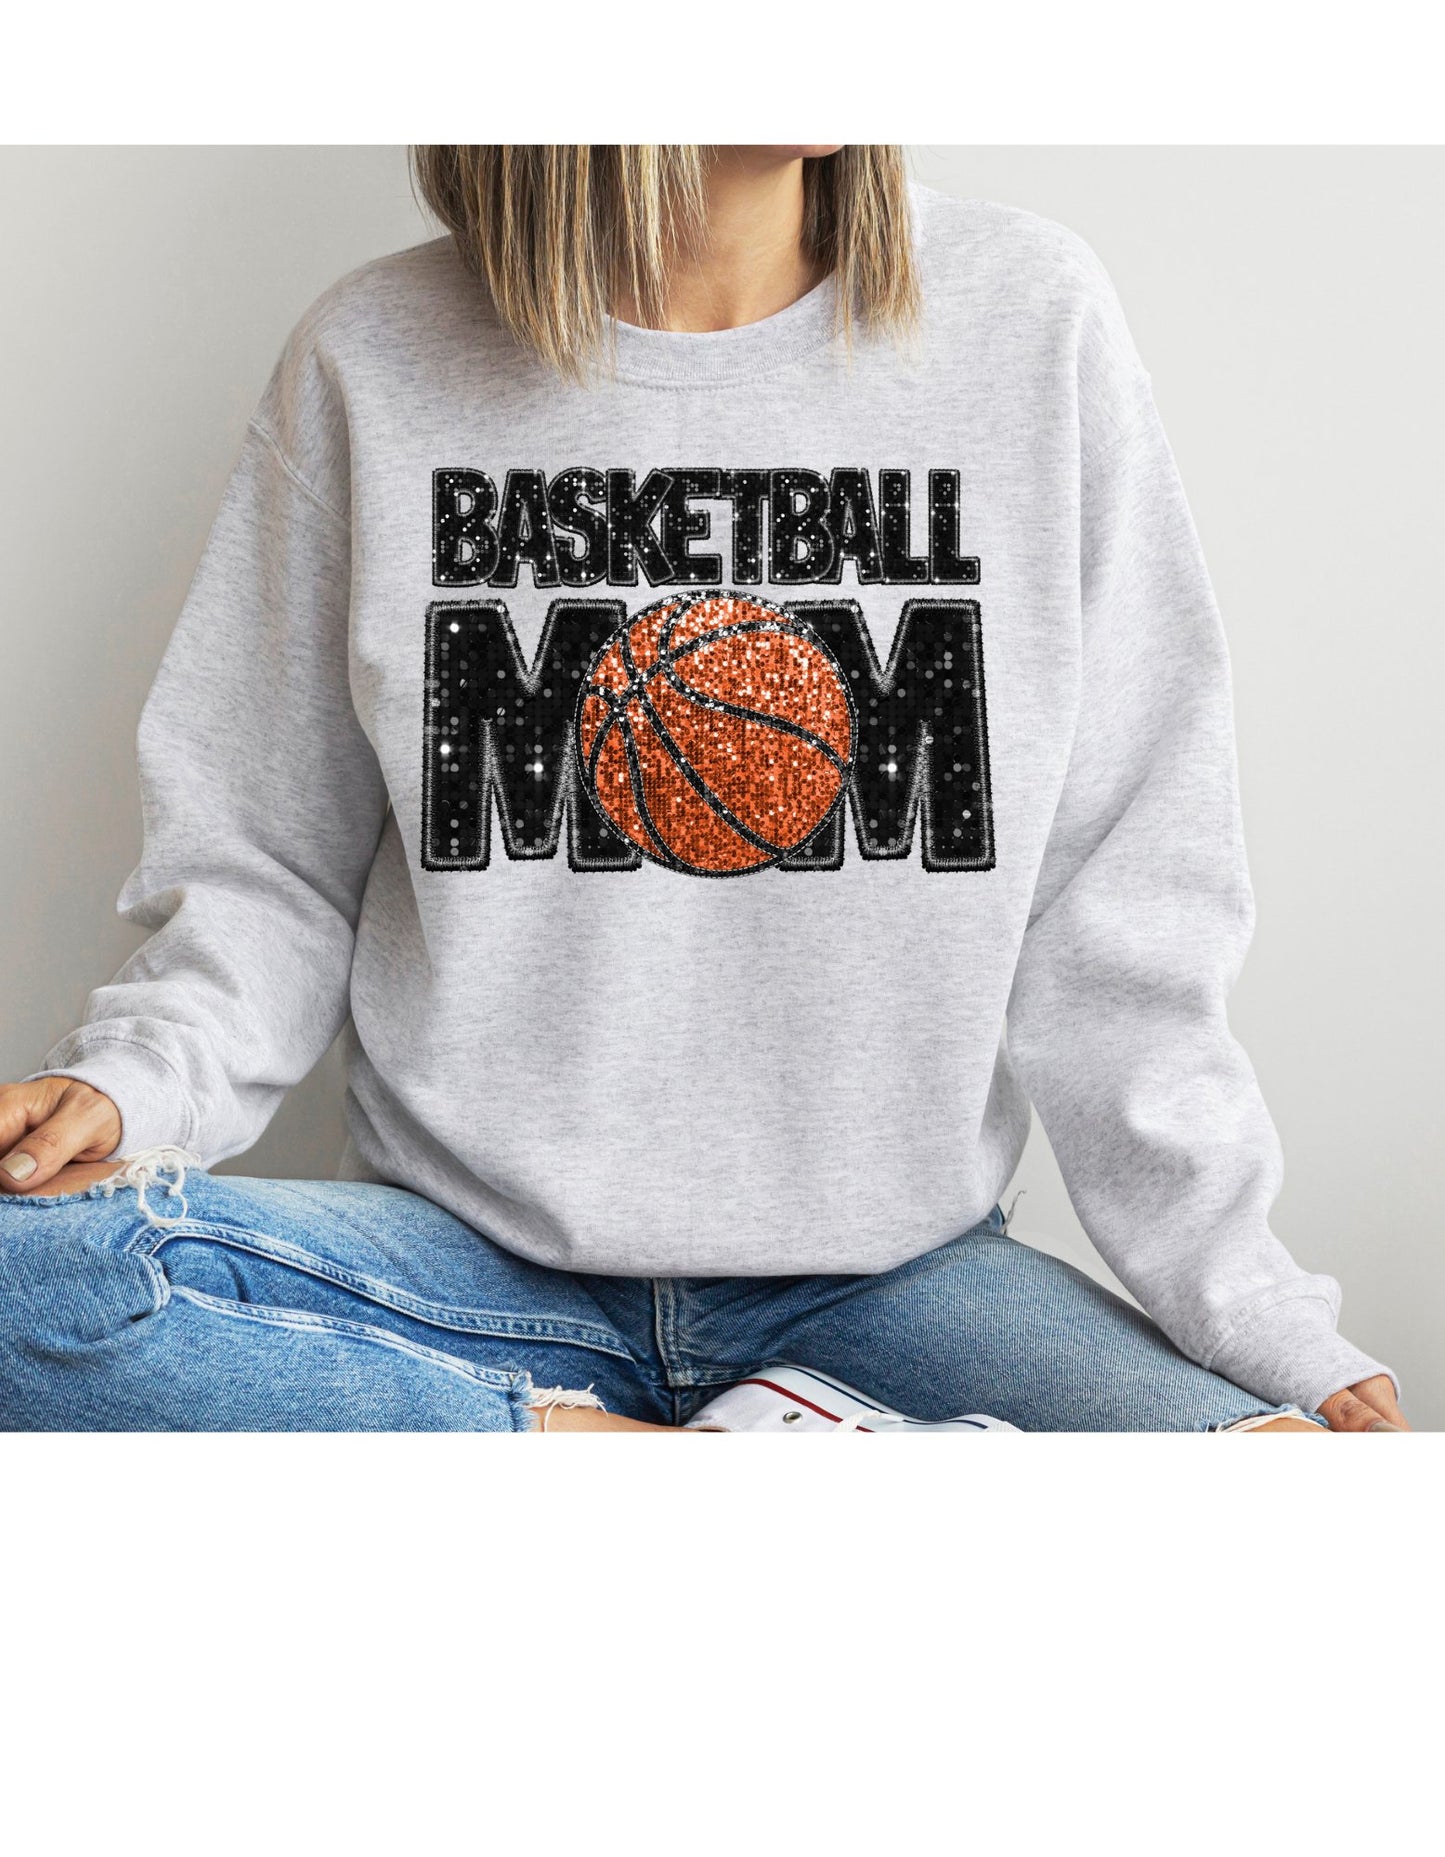 Basketball mom game day sweatshirt - 4 little hearts